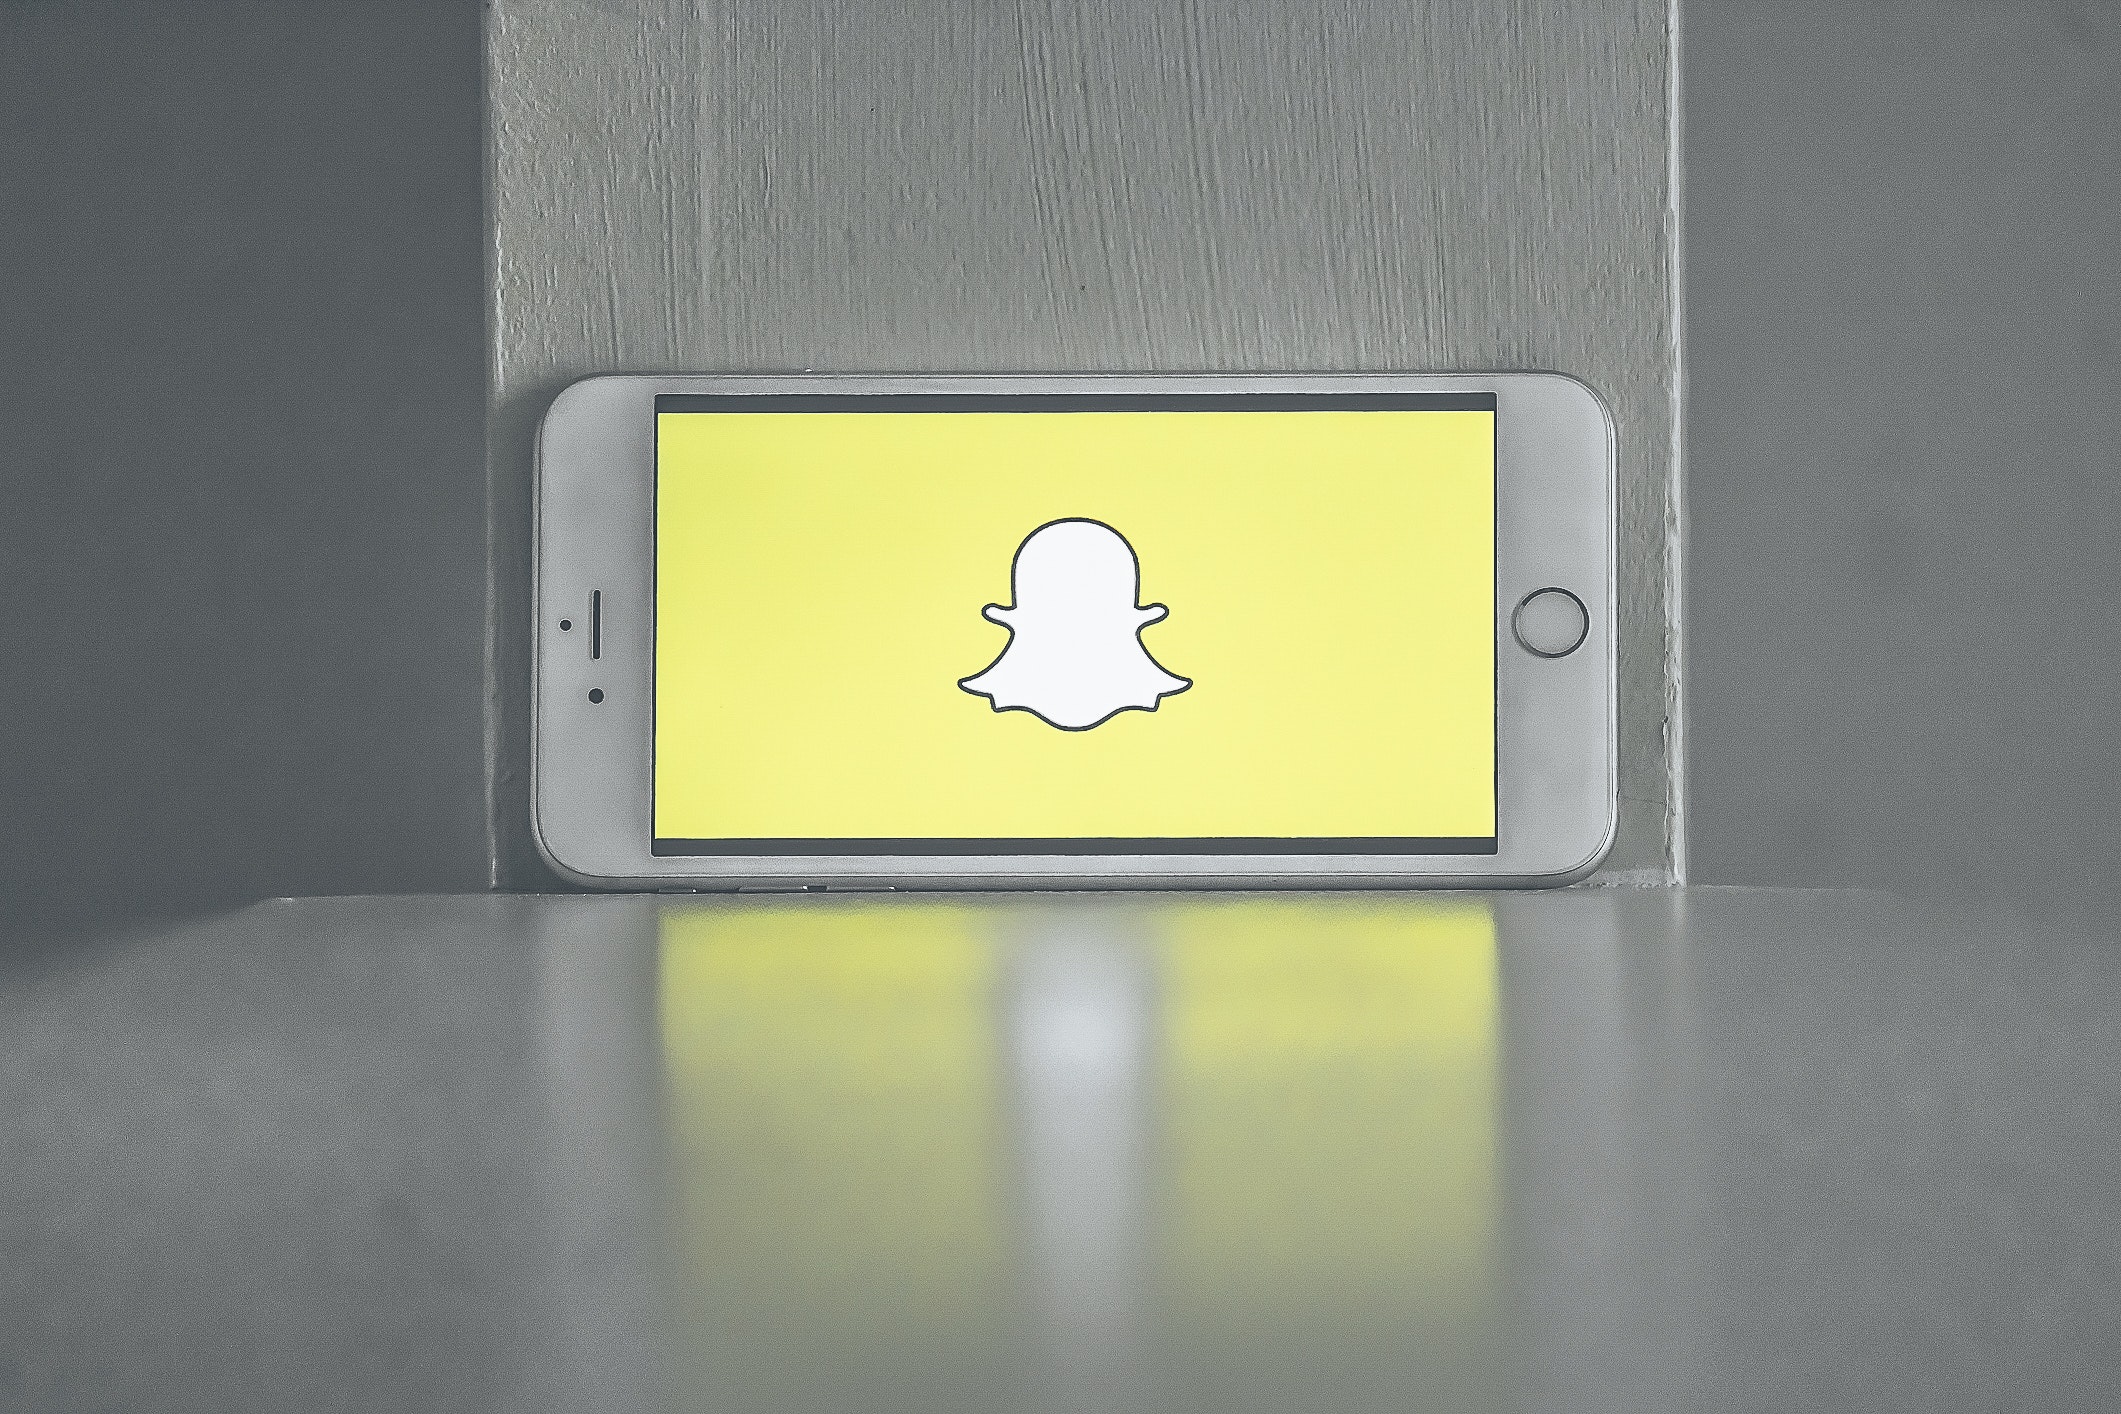 Snapchat testet neues Deepfake-Feature Cameo